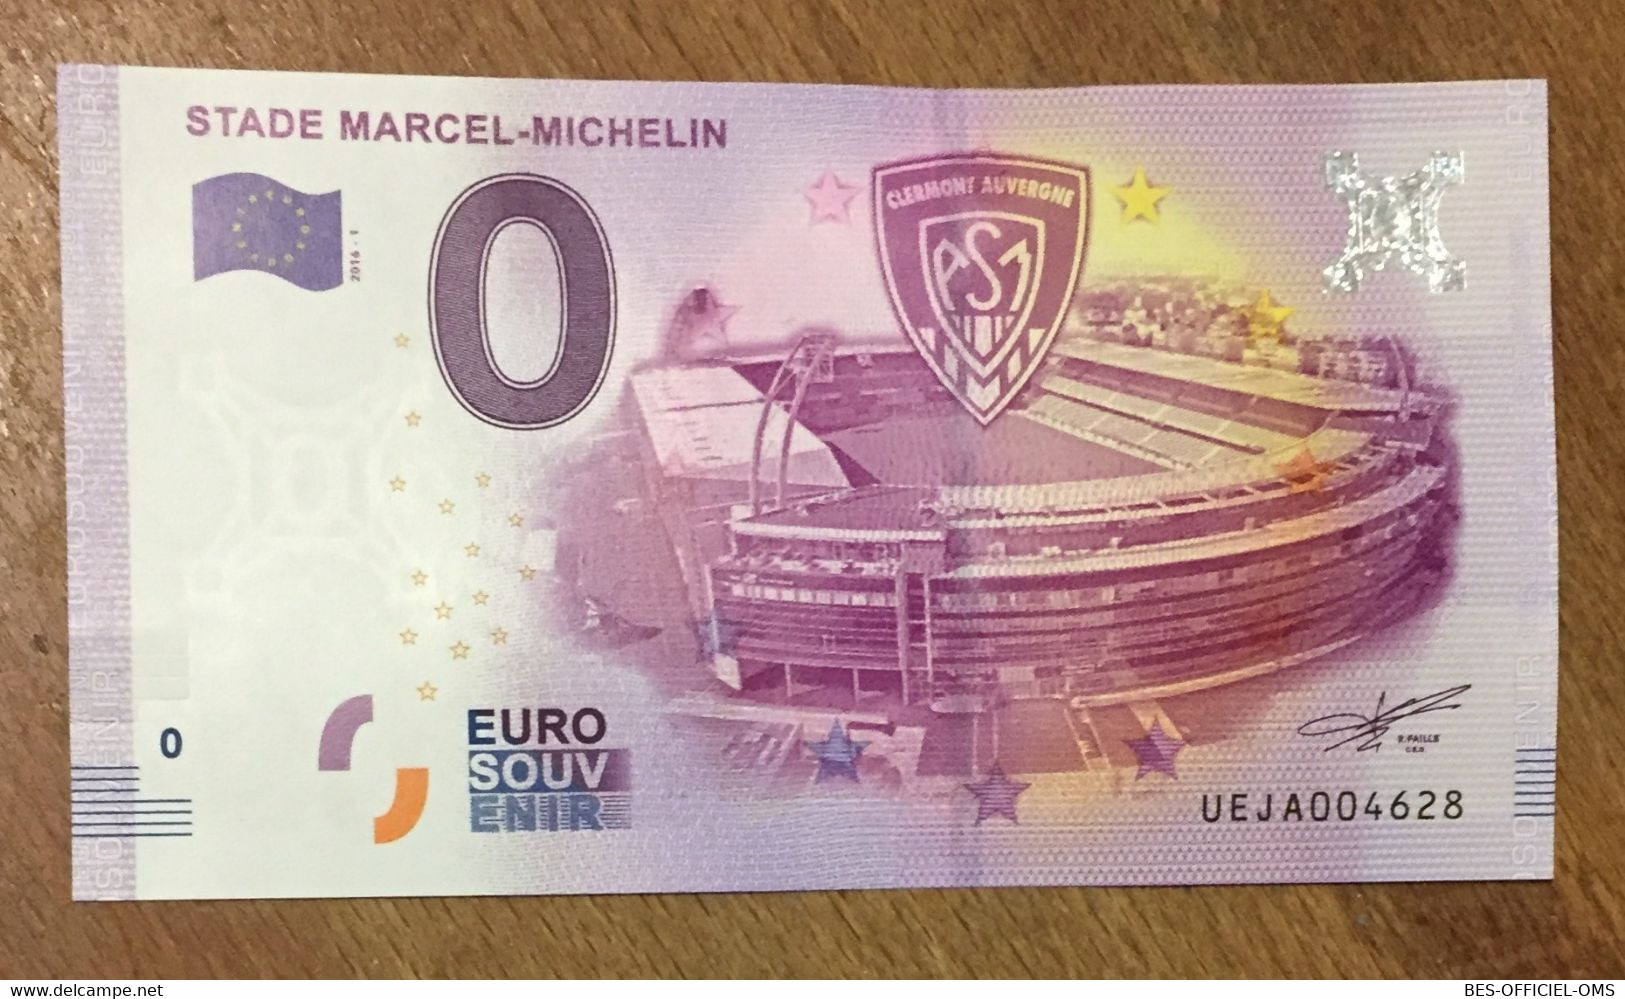 2016 BILLET 0 EURO SOUVENIR DPT 63 STADE MARCEL-MICHELIN ZERO 0 EURO SCHEIN BANKNOTE PAPER MONEY - Private Proofs / Unofficial